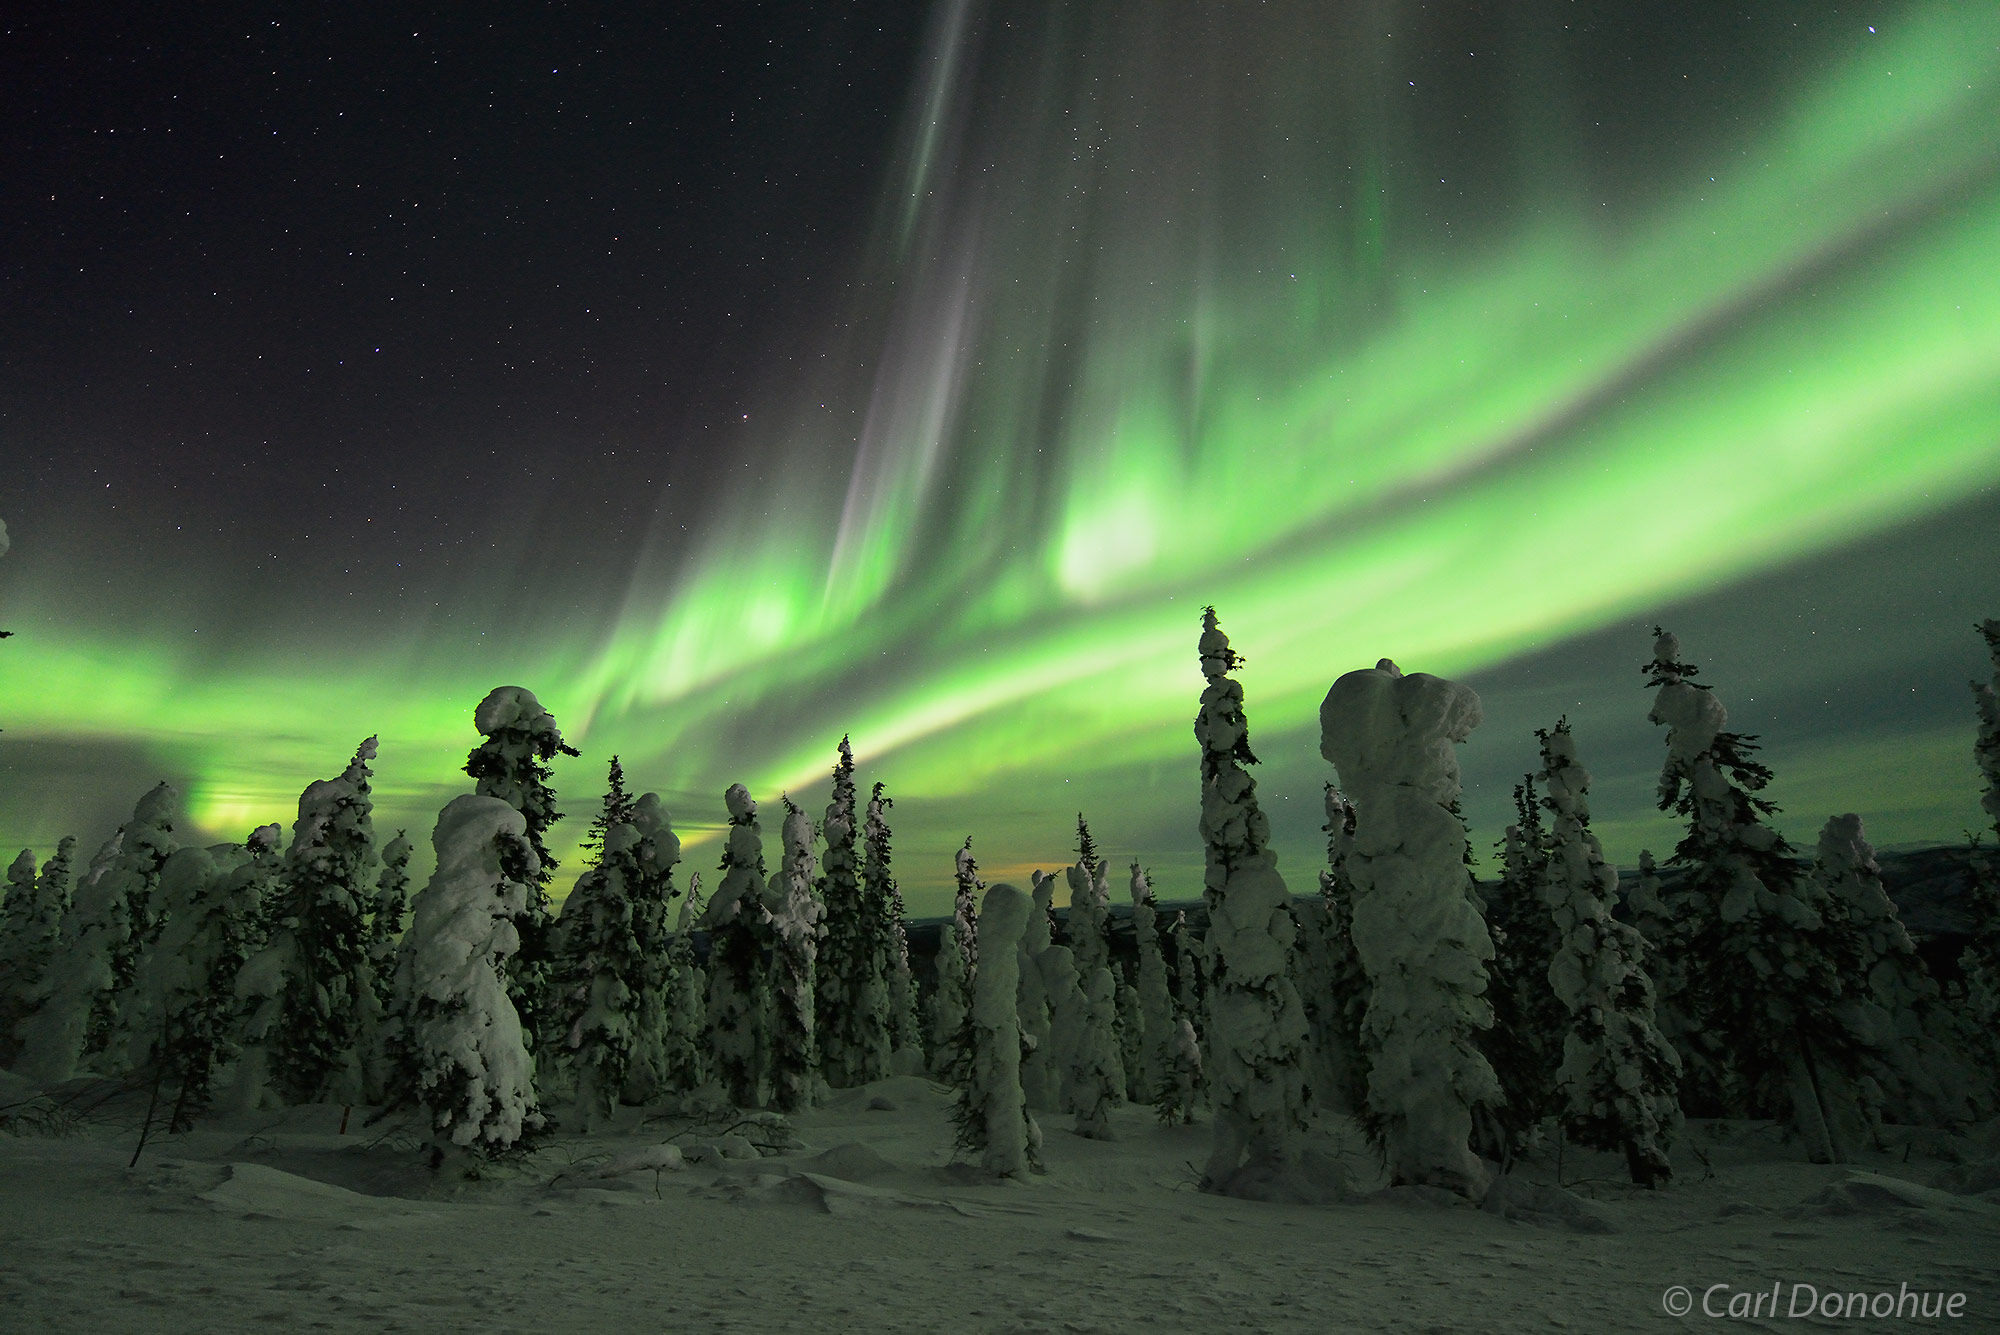 White spruce trees and the Aurora borealis photo, or northern lights, interior Alaska.